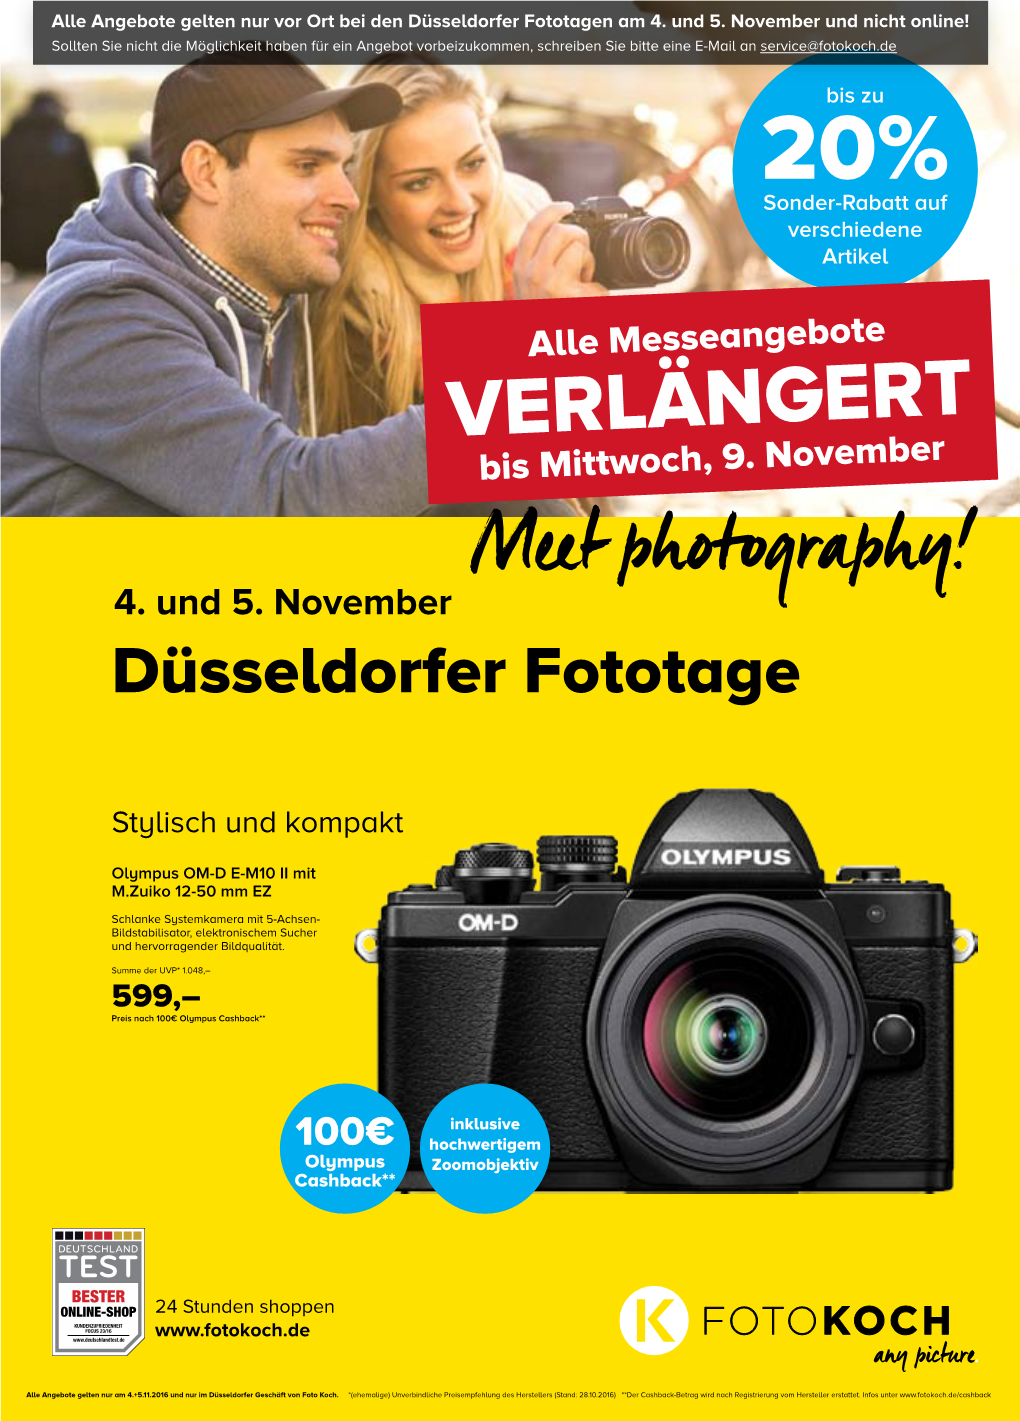 Meet Photography! 4